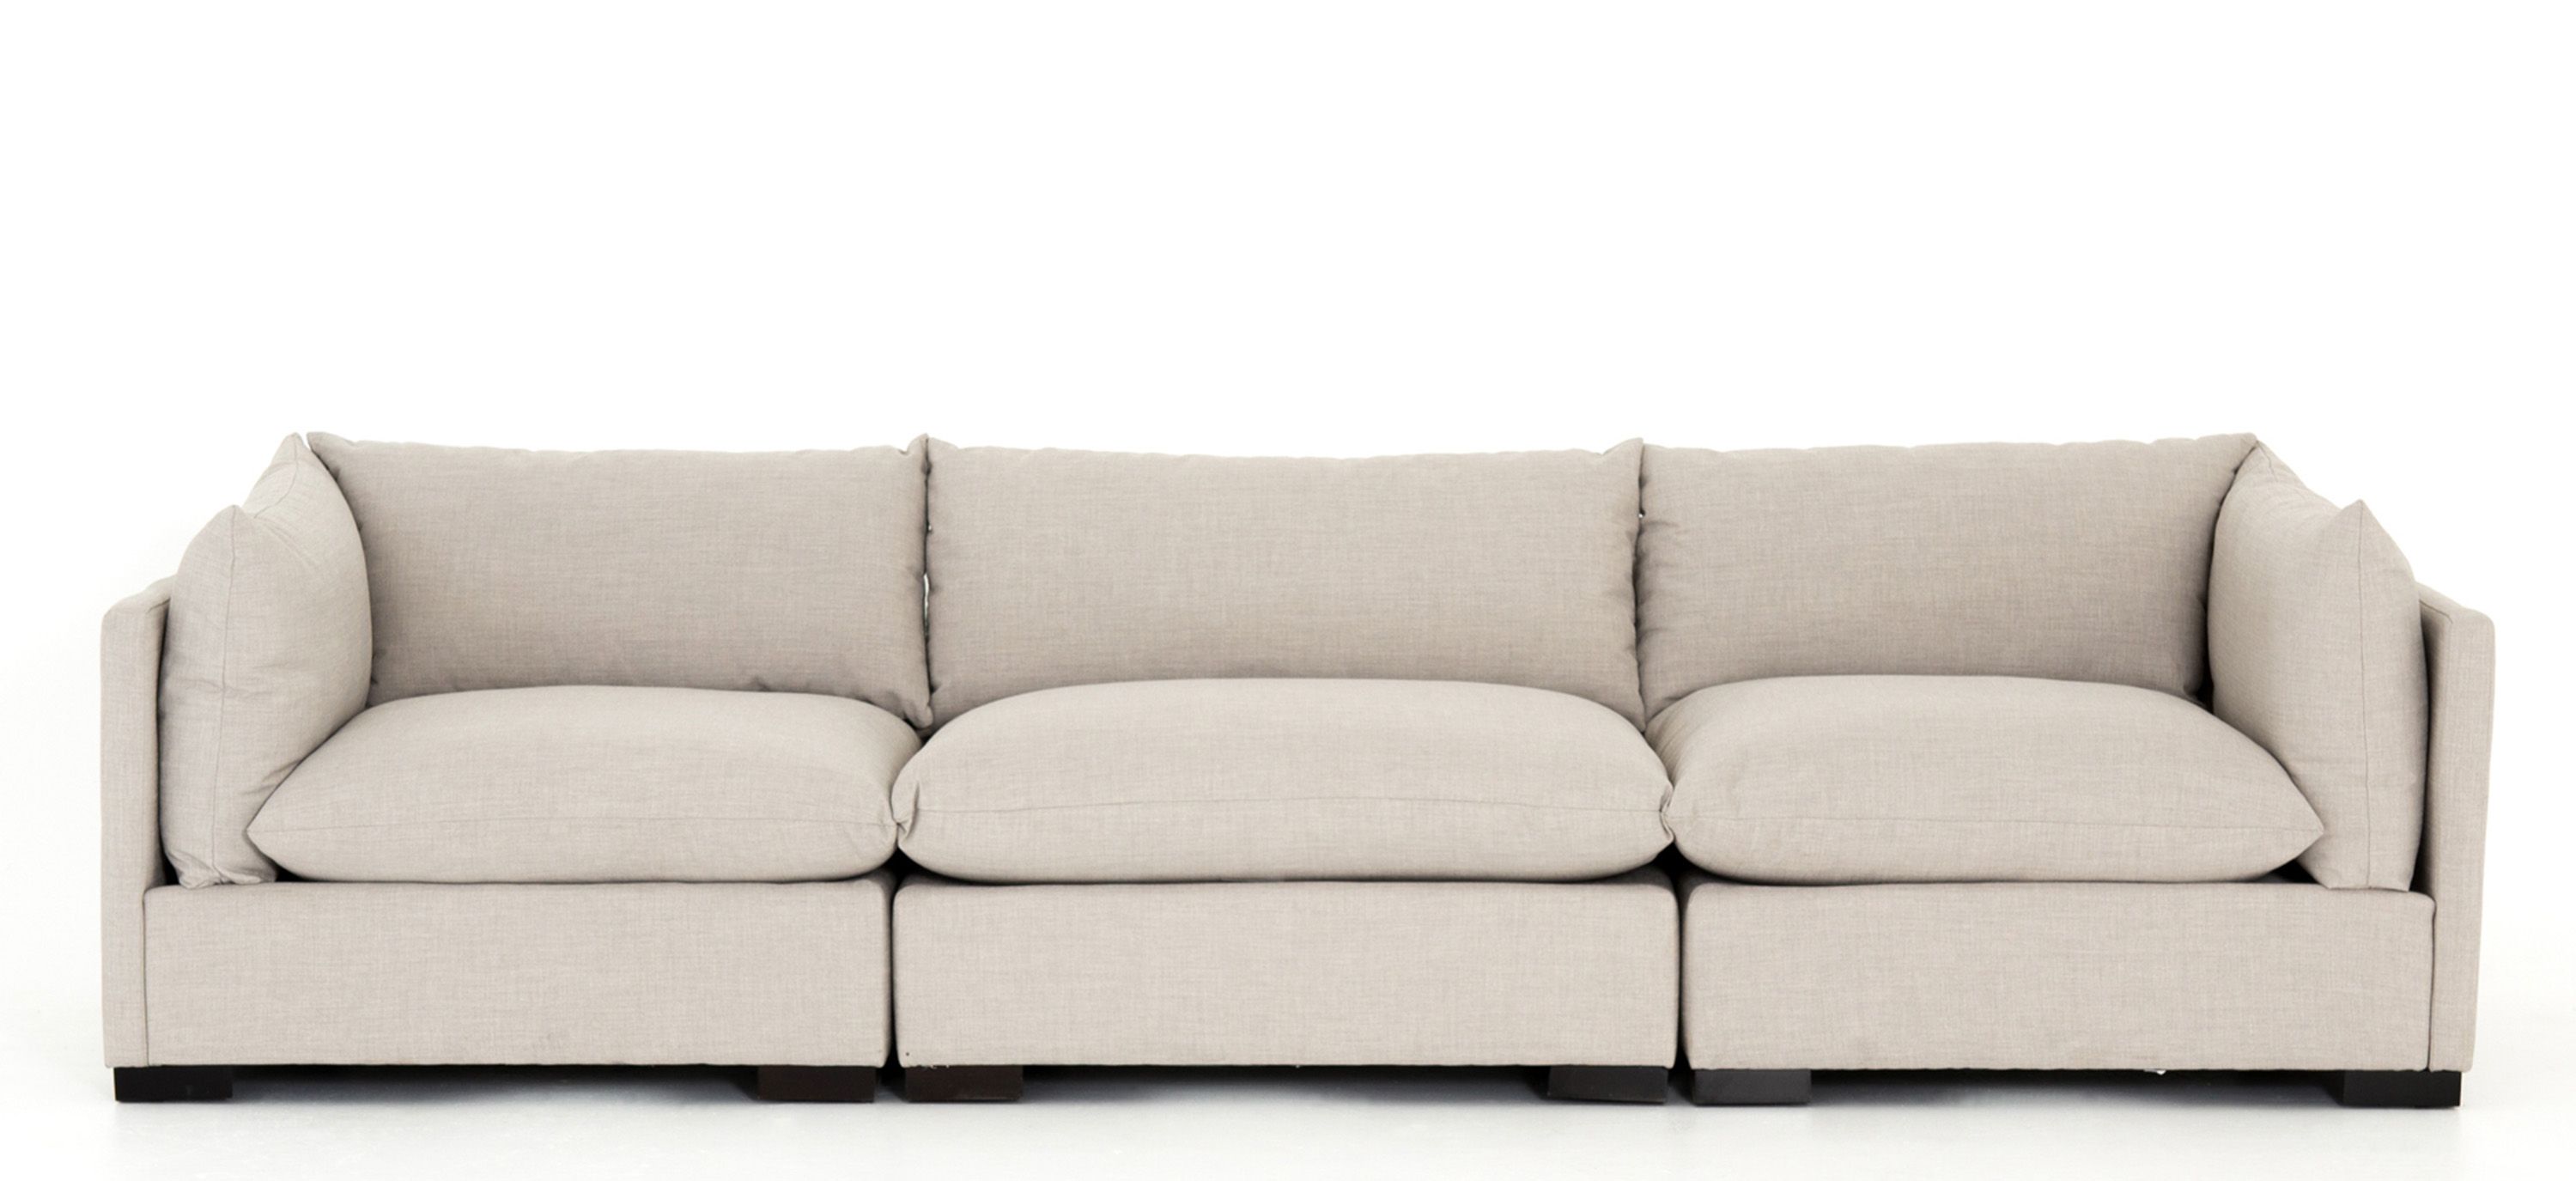 Westwood 3-pc. Modular Sectional Sofa